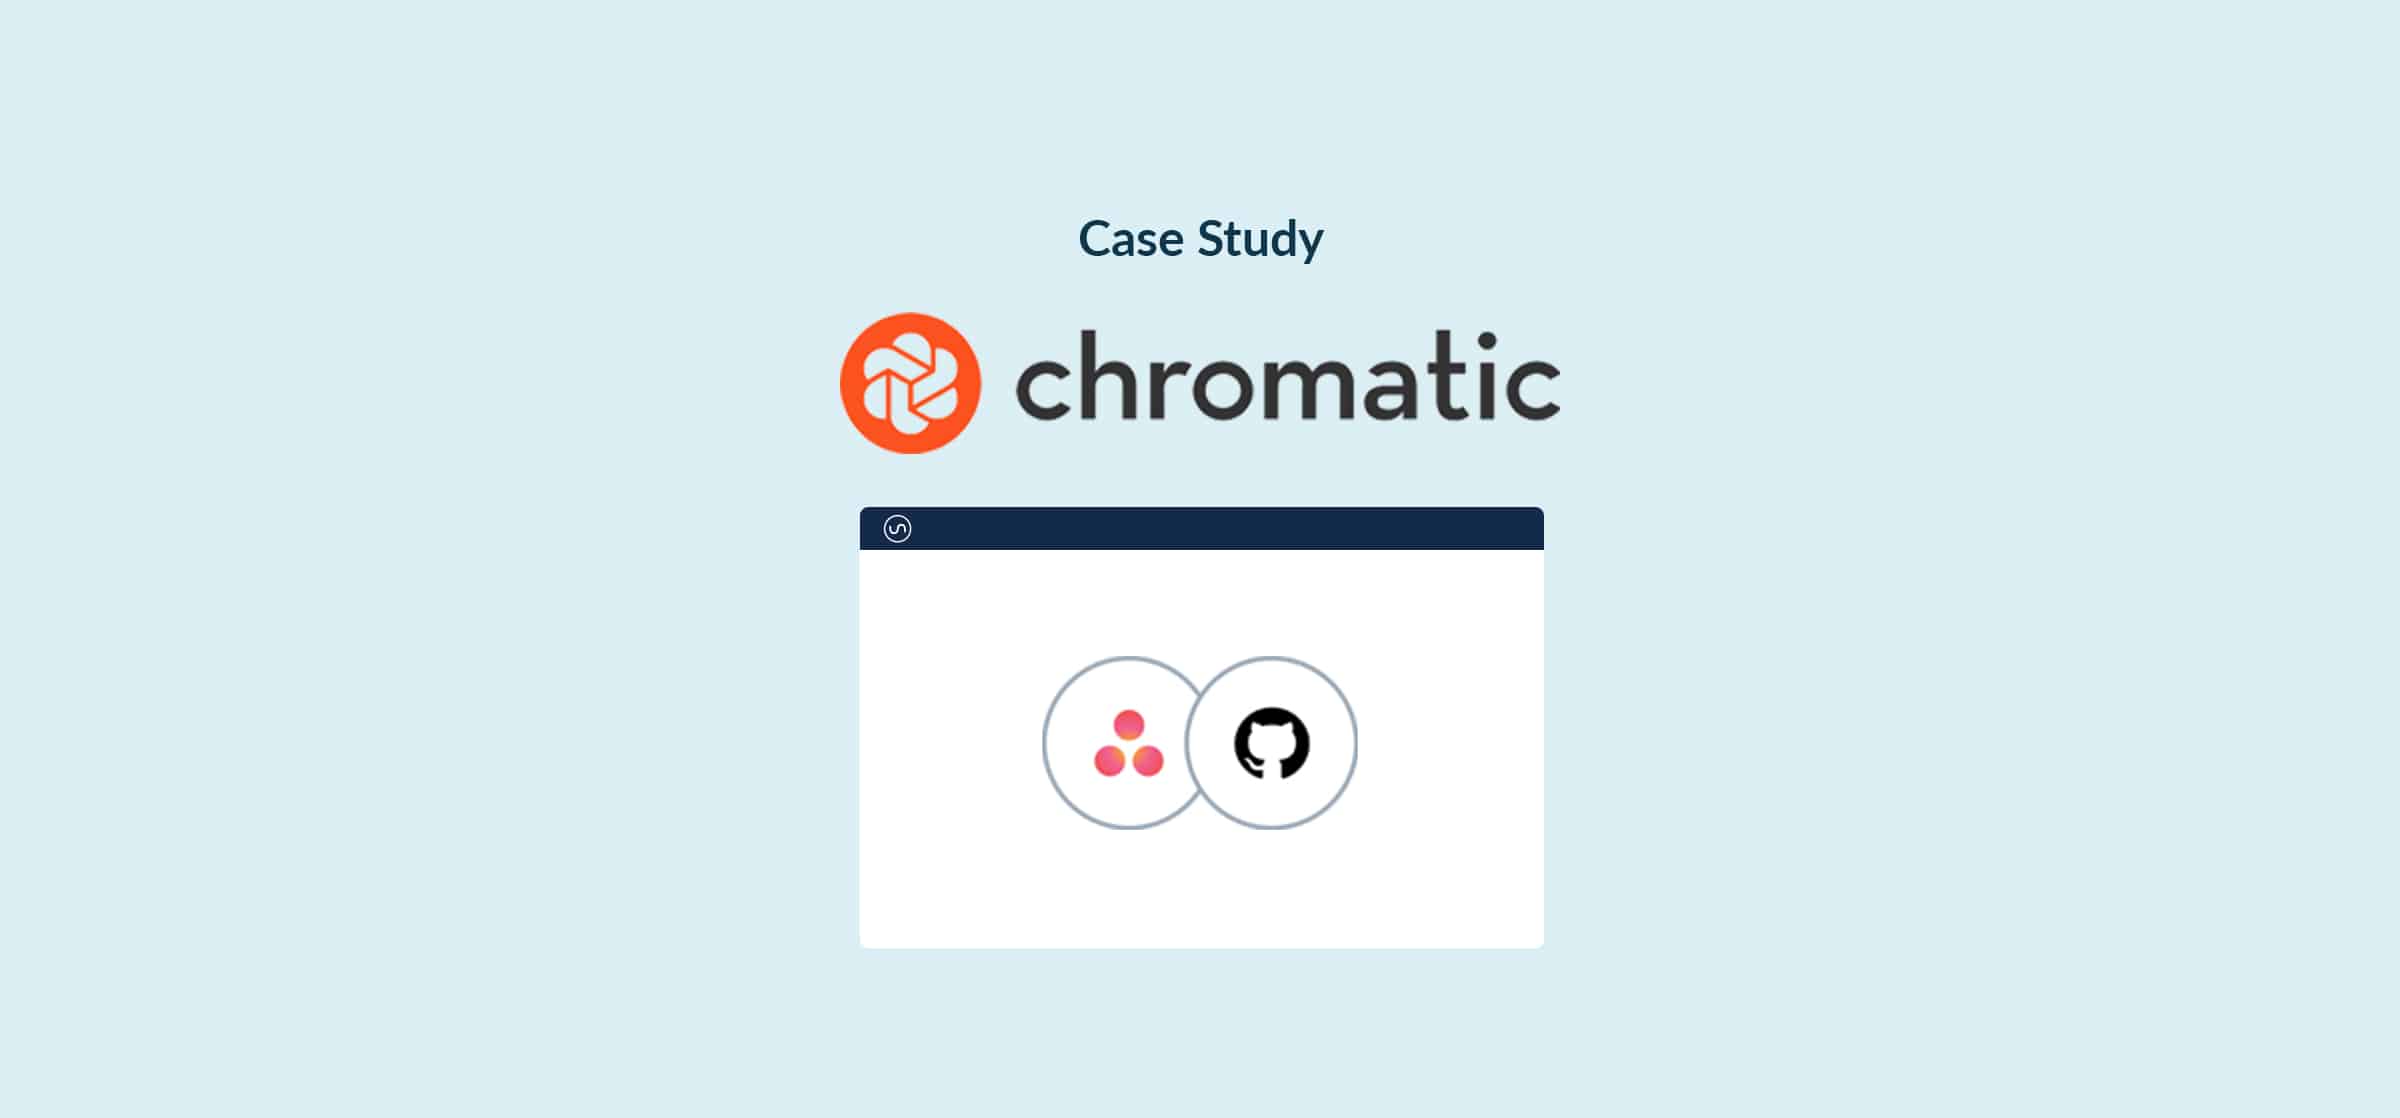 Logos for Chromatic, Asana, and GitHub, representing the Chromatic case study